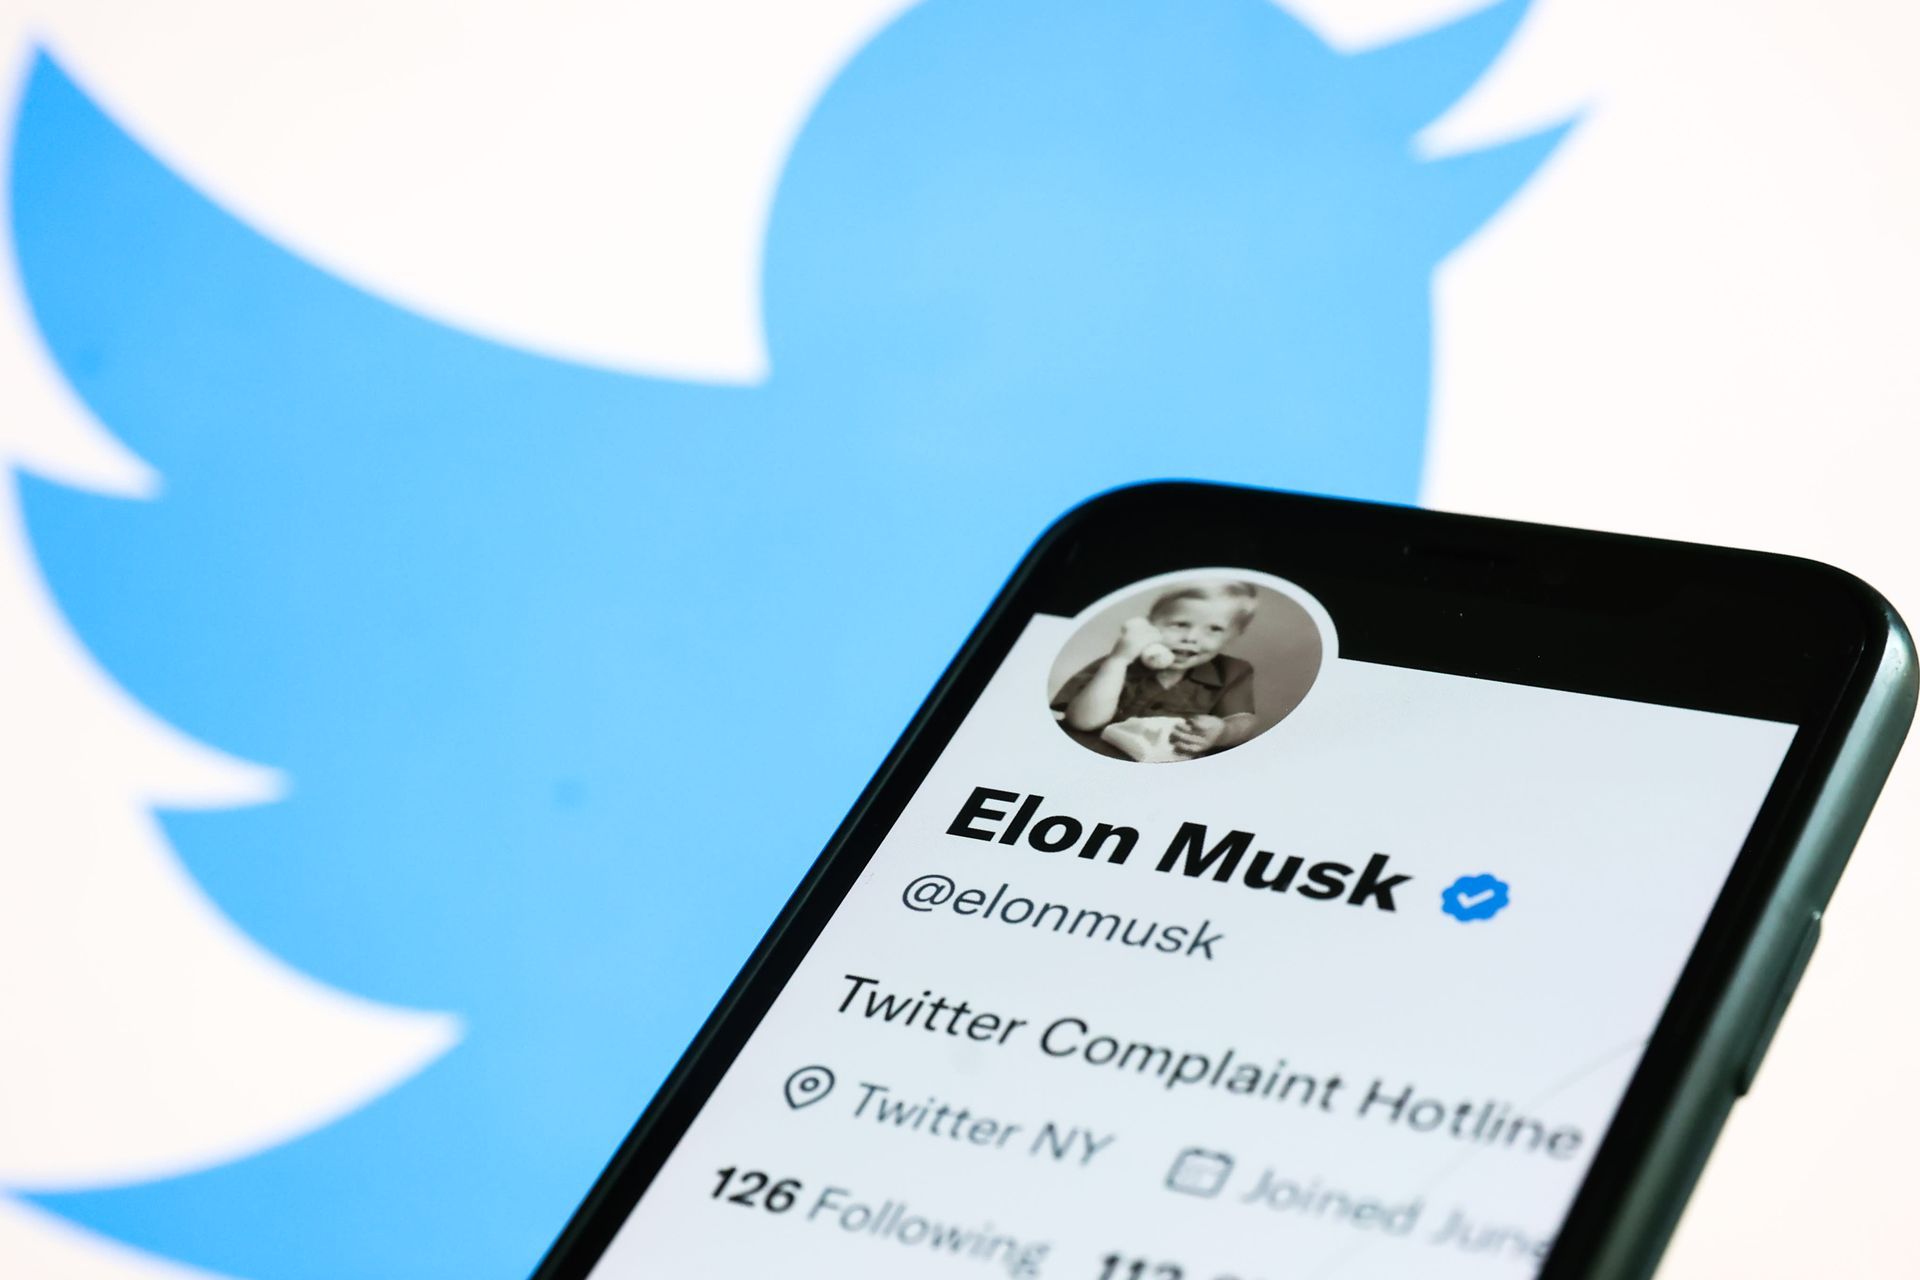 Elon Musk: Twitter Blue subscribers get priority replies soon